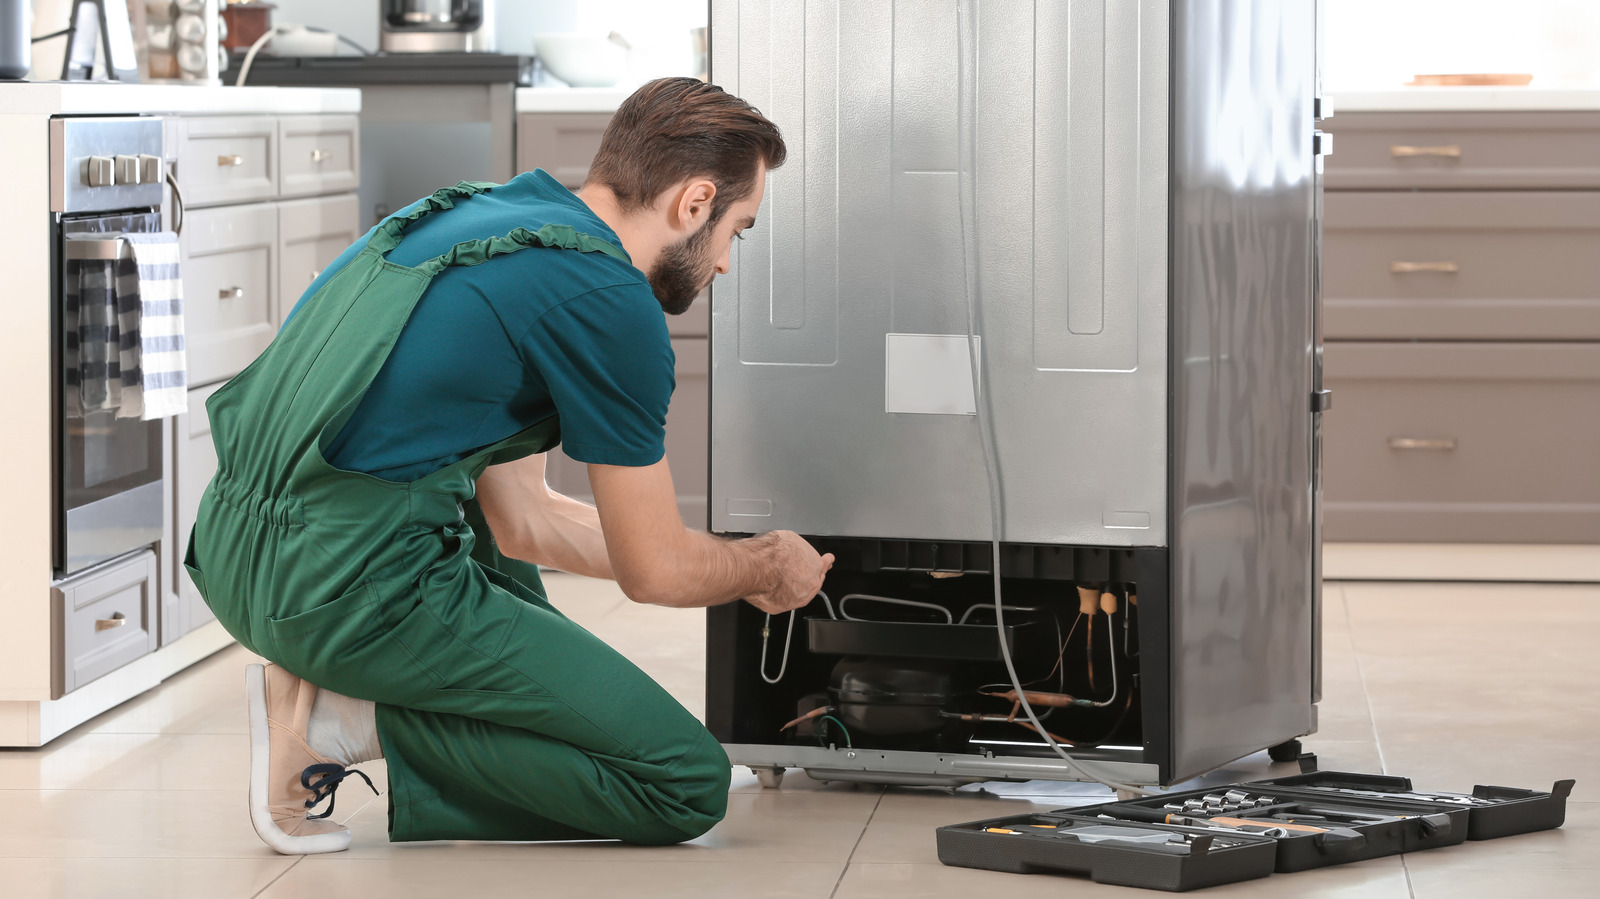 Dependable Refrigeration & Appliance Repair Service For Sub-zero Refrigerator Freezer Services Marana